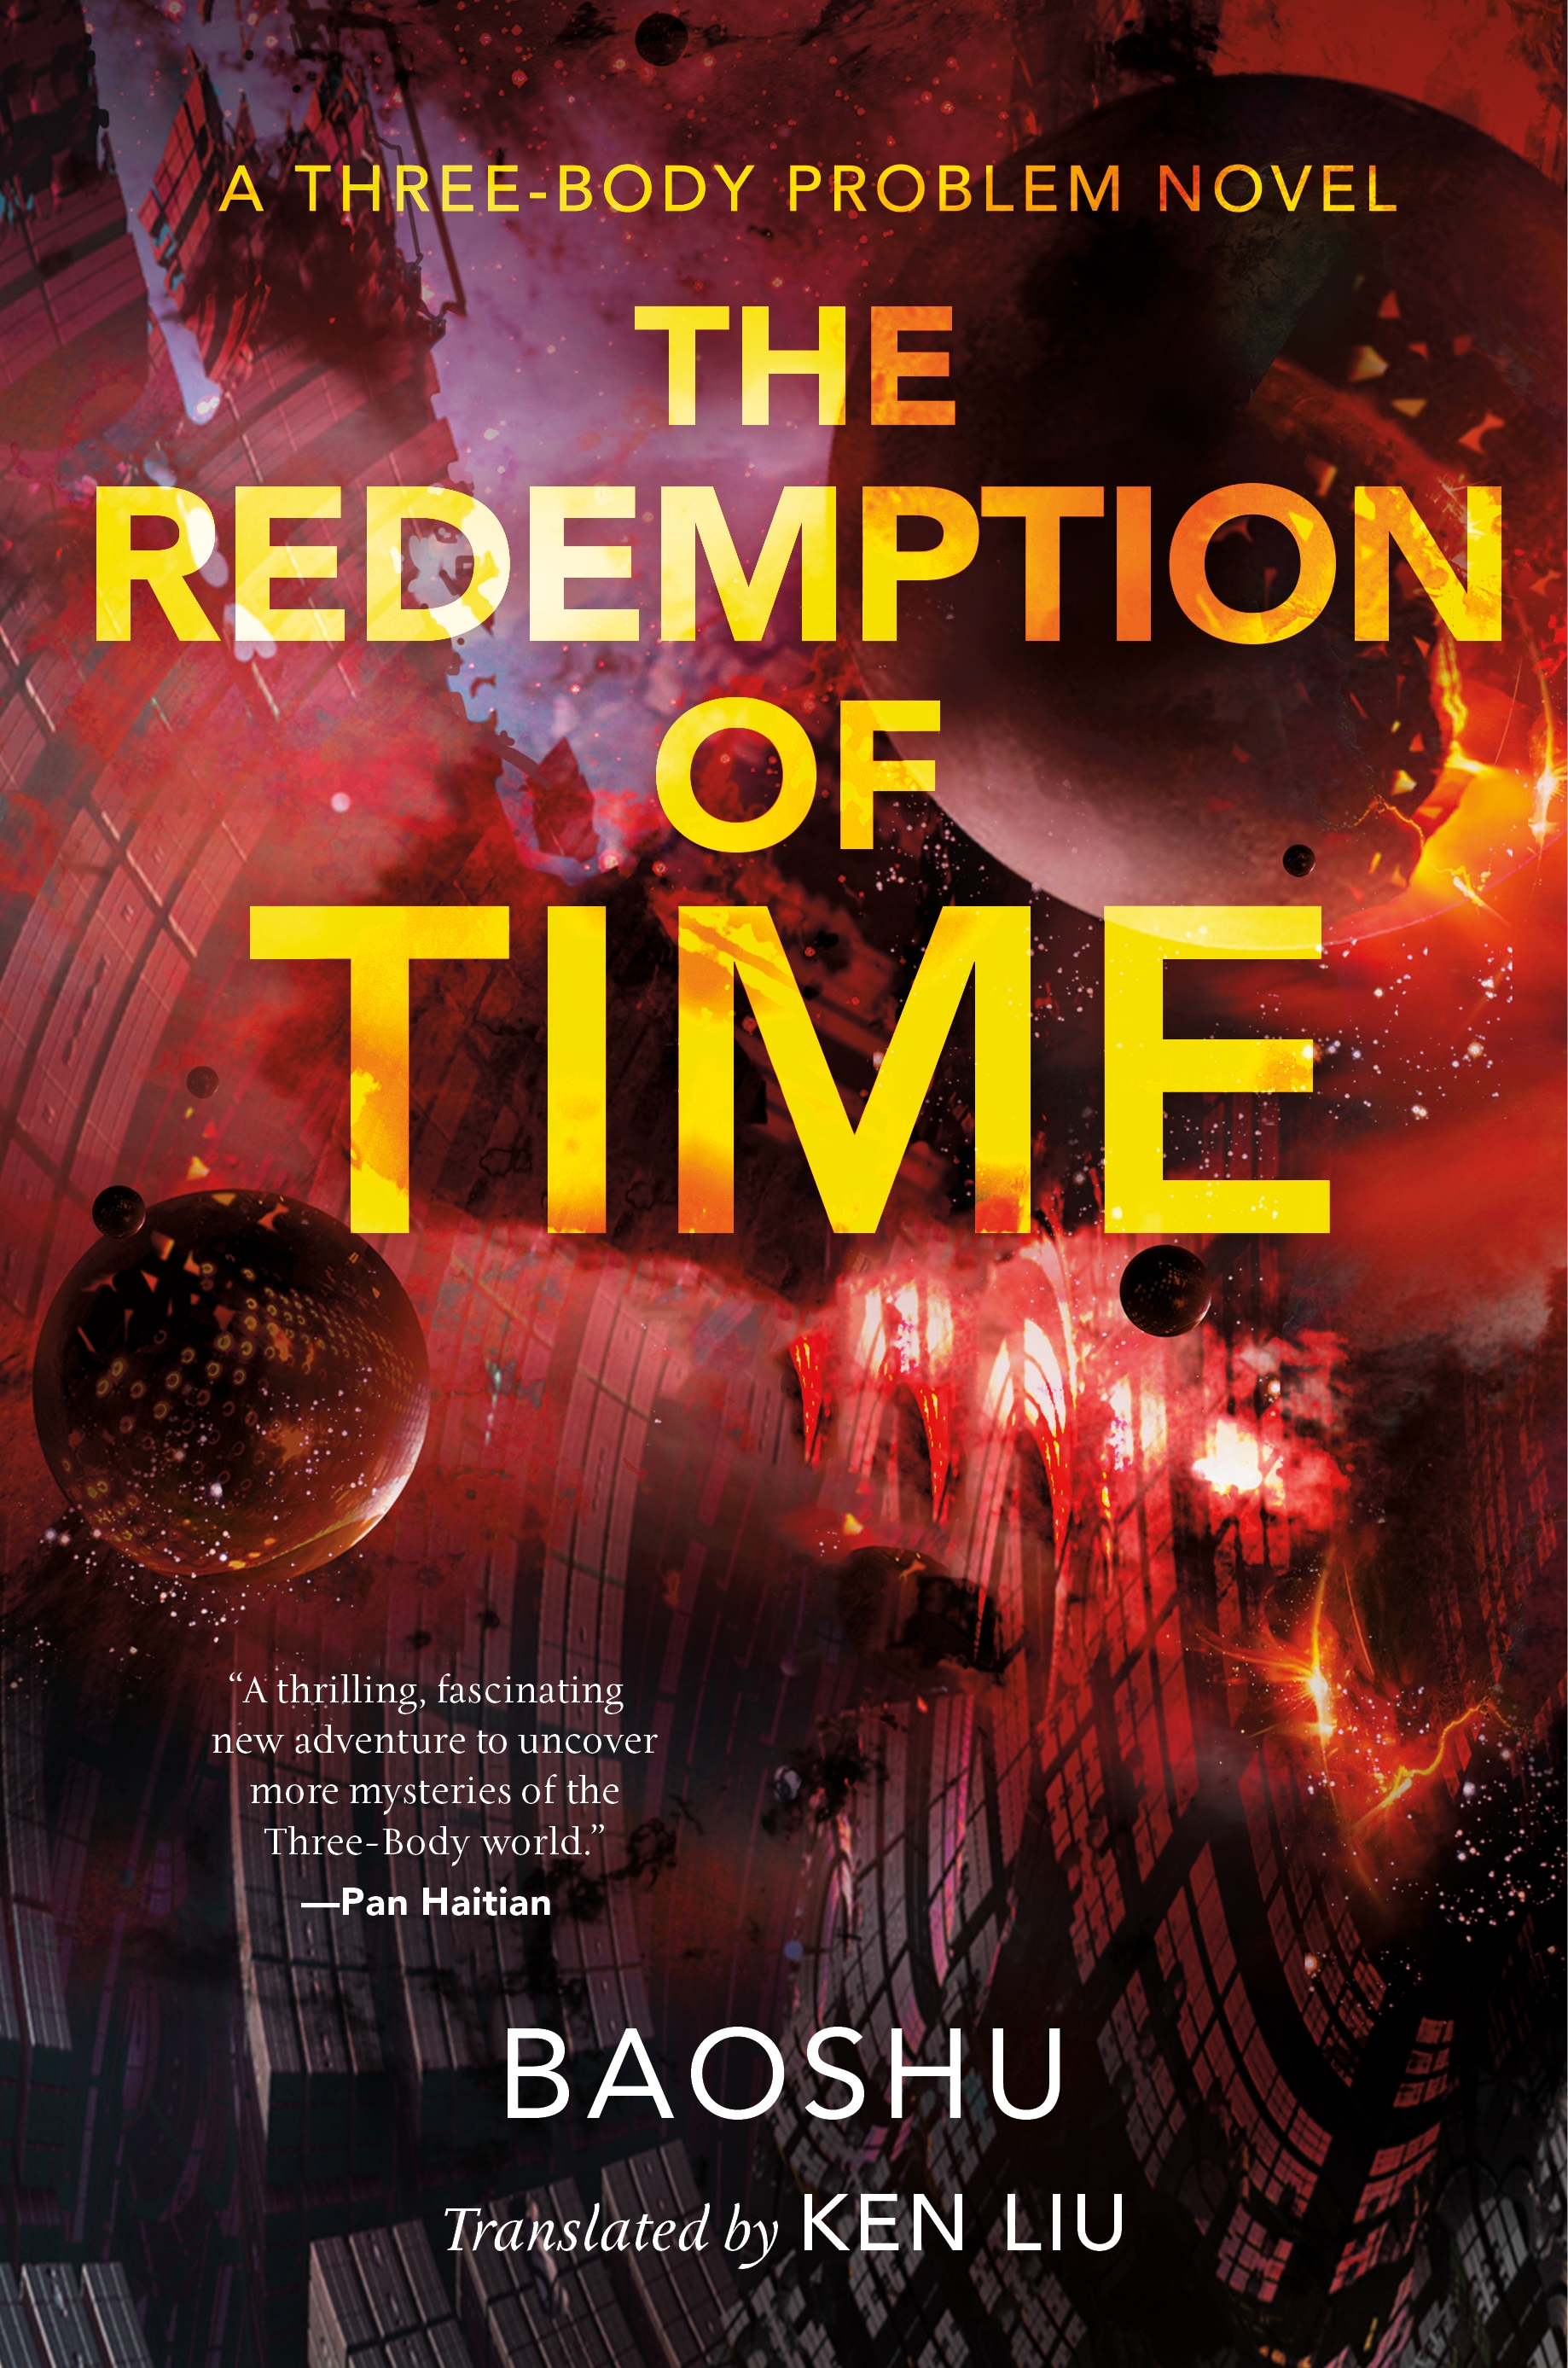 The Redemption of Time : A Three-Body Problem Novel by Baoshu, Ken Liu